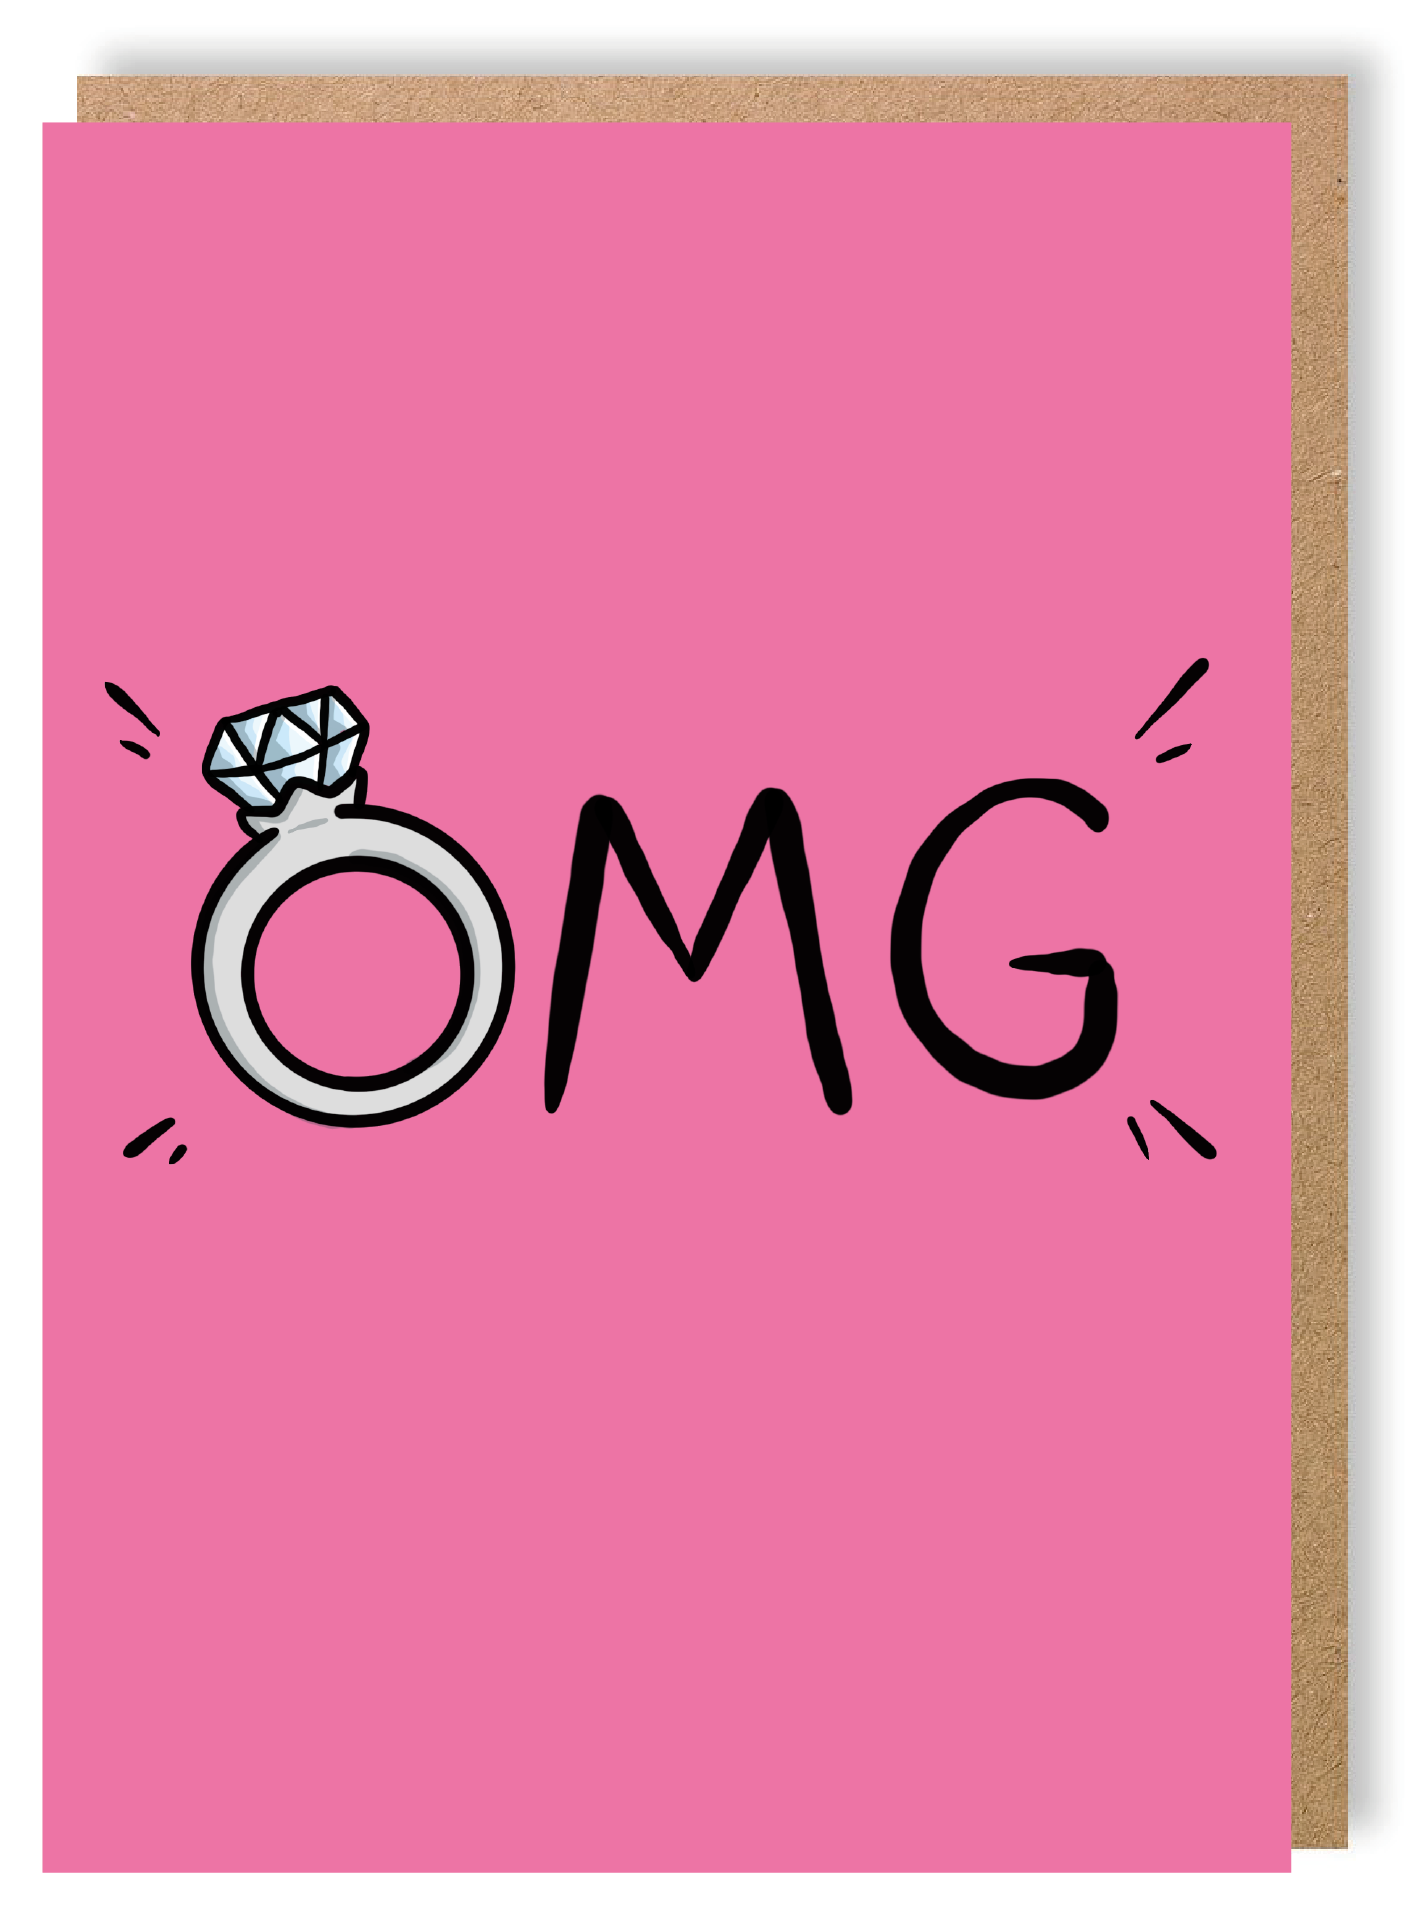 OMG - Engagement - Greetings Card - LukeHorton Art